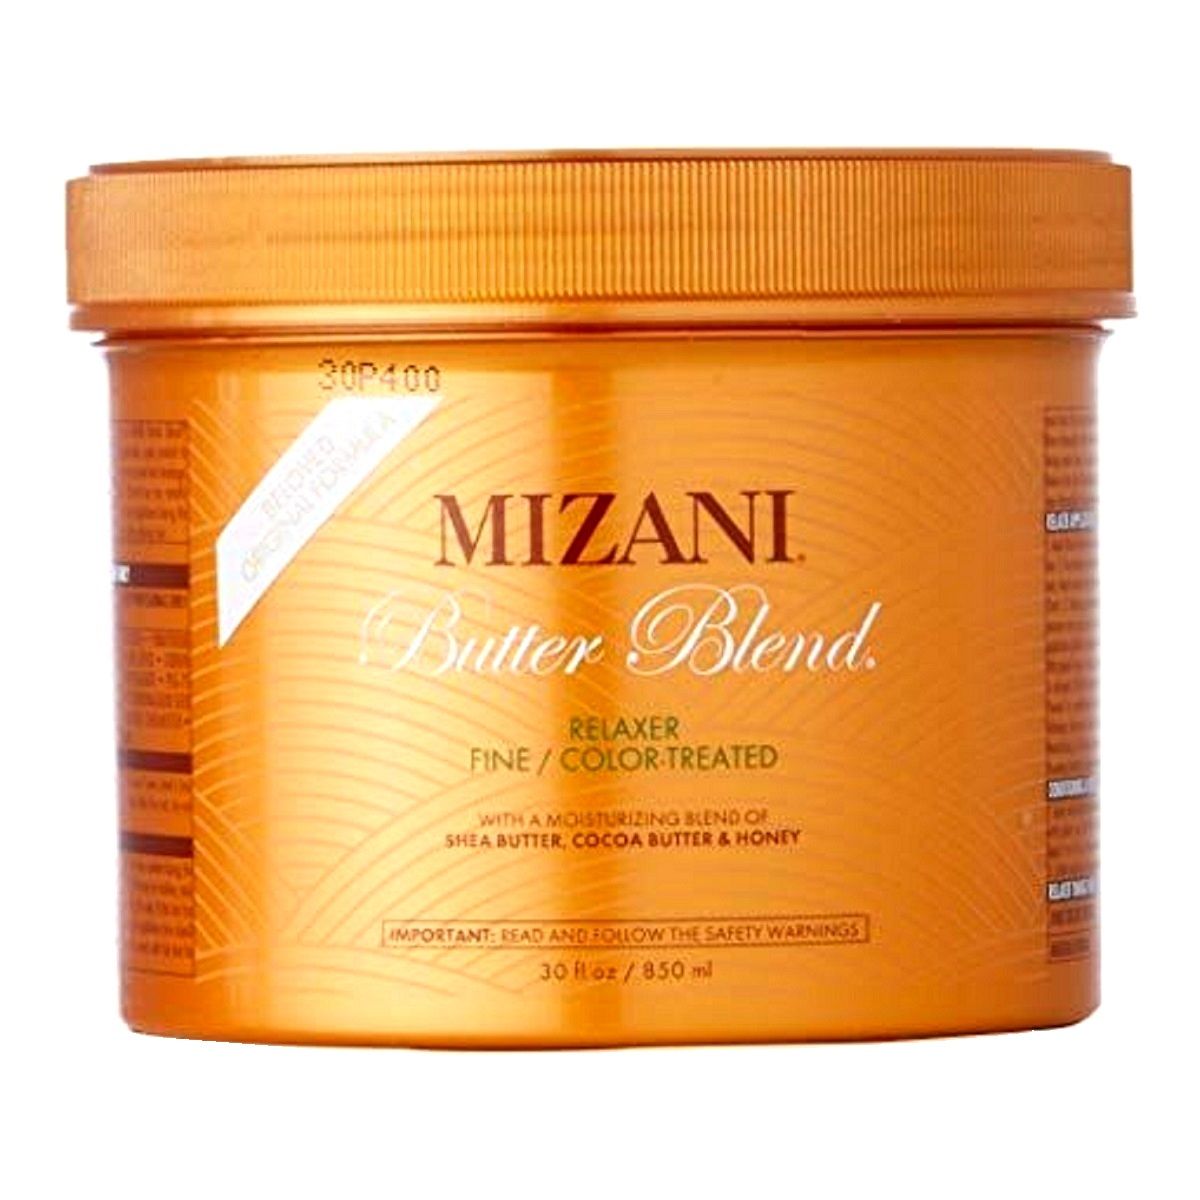 Mizani Butter Blend Relaxer- FINE/COLOR TREATED HAIR